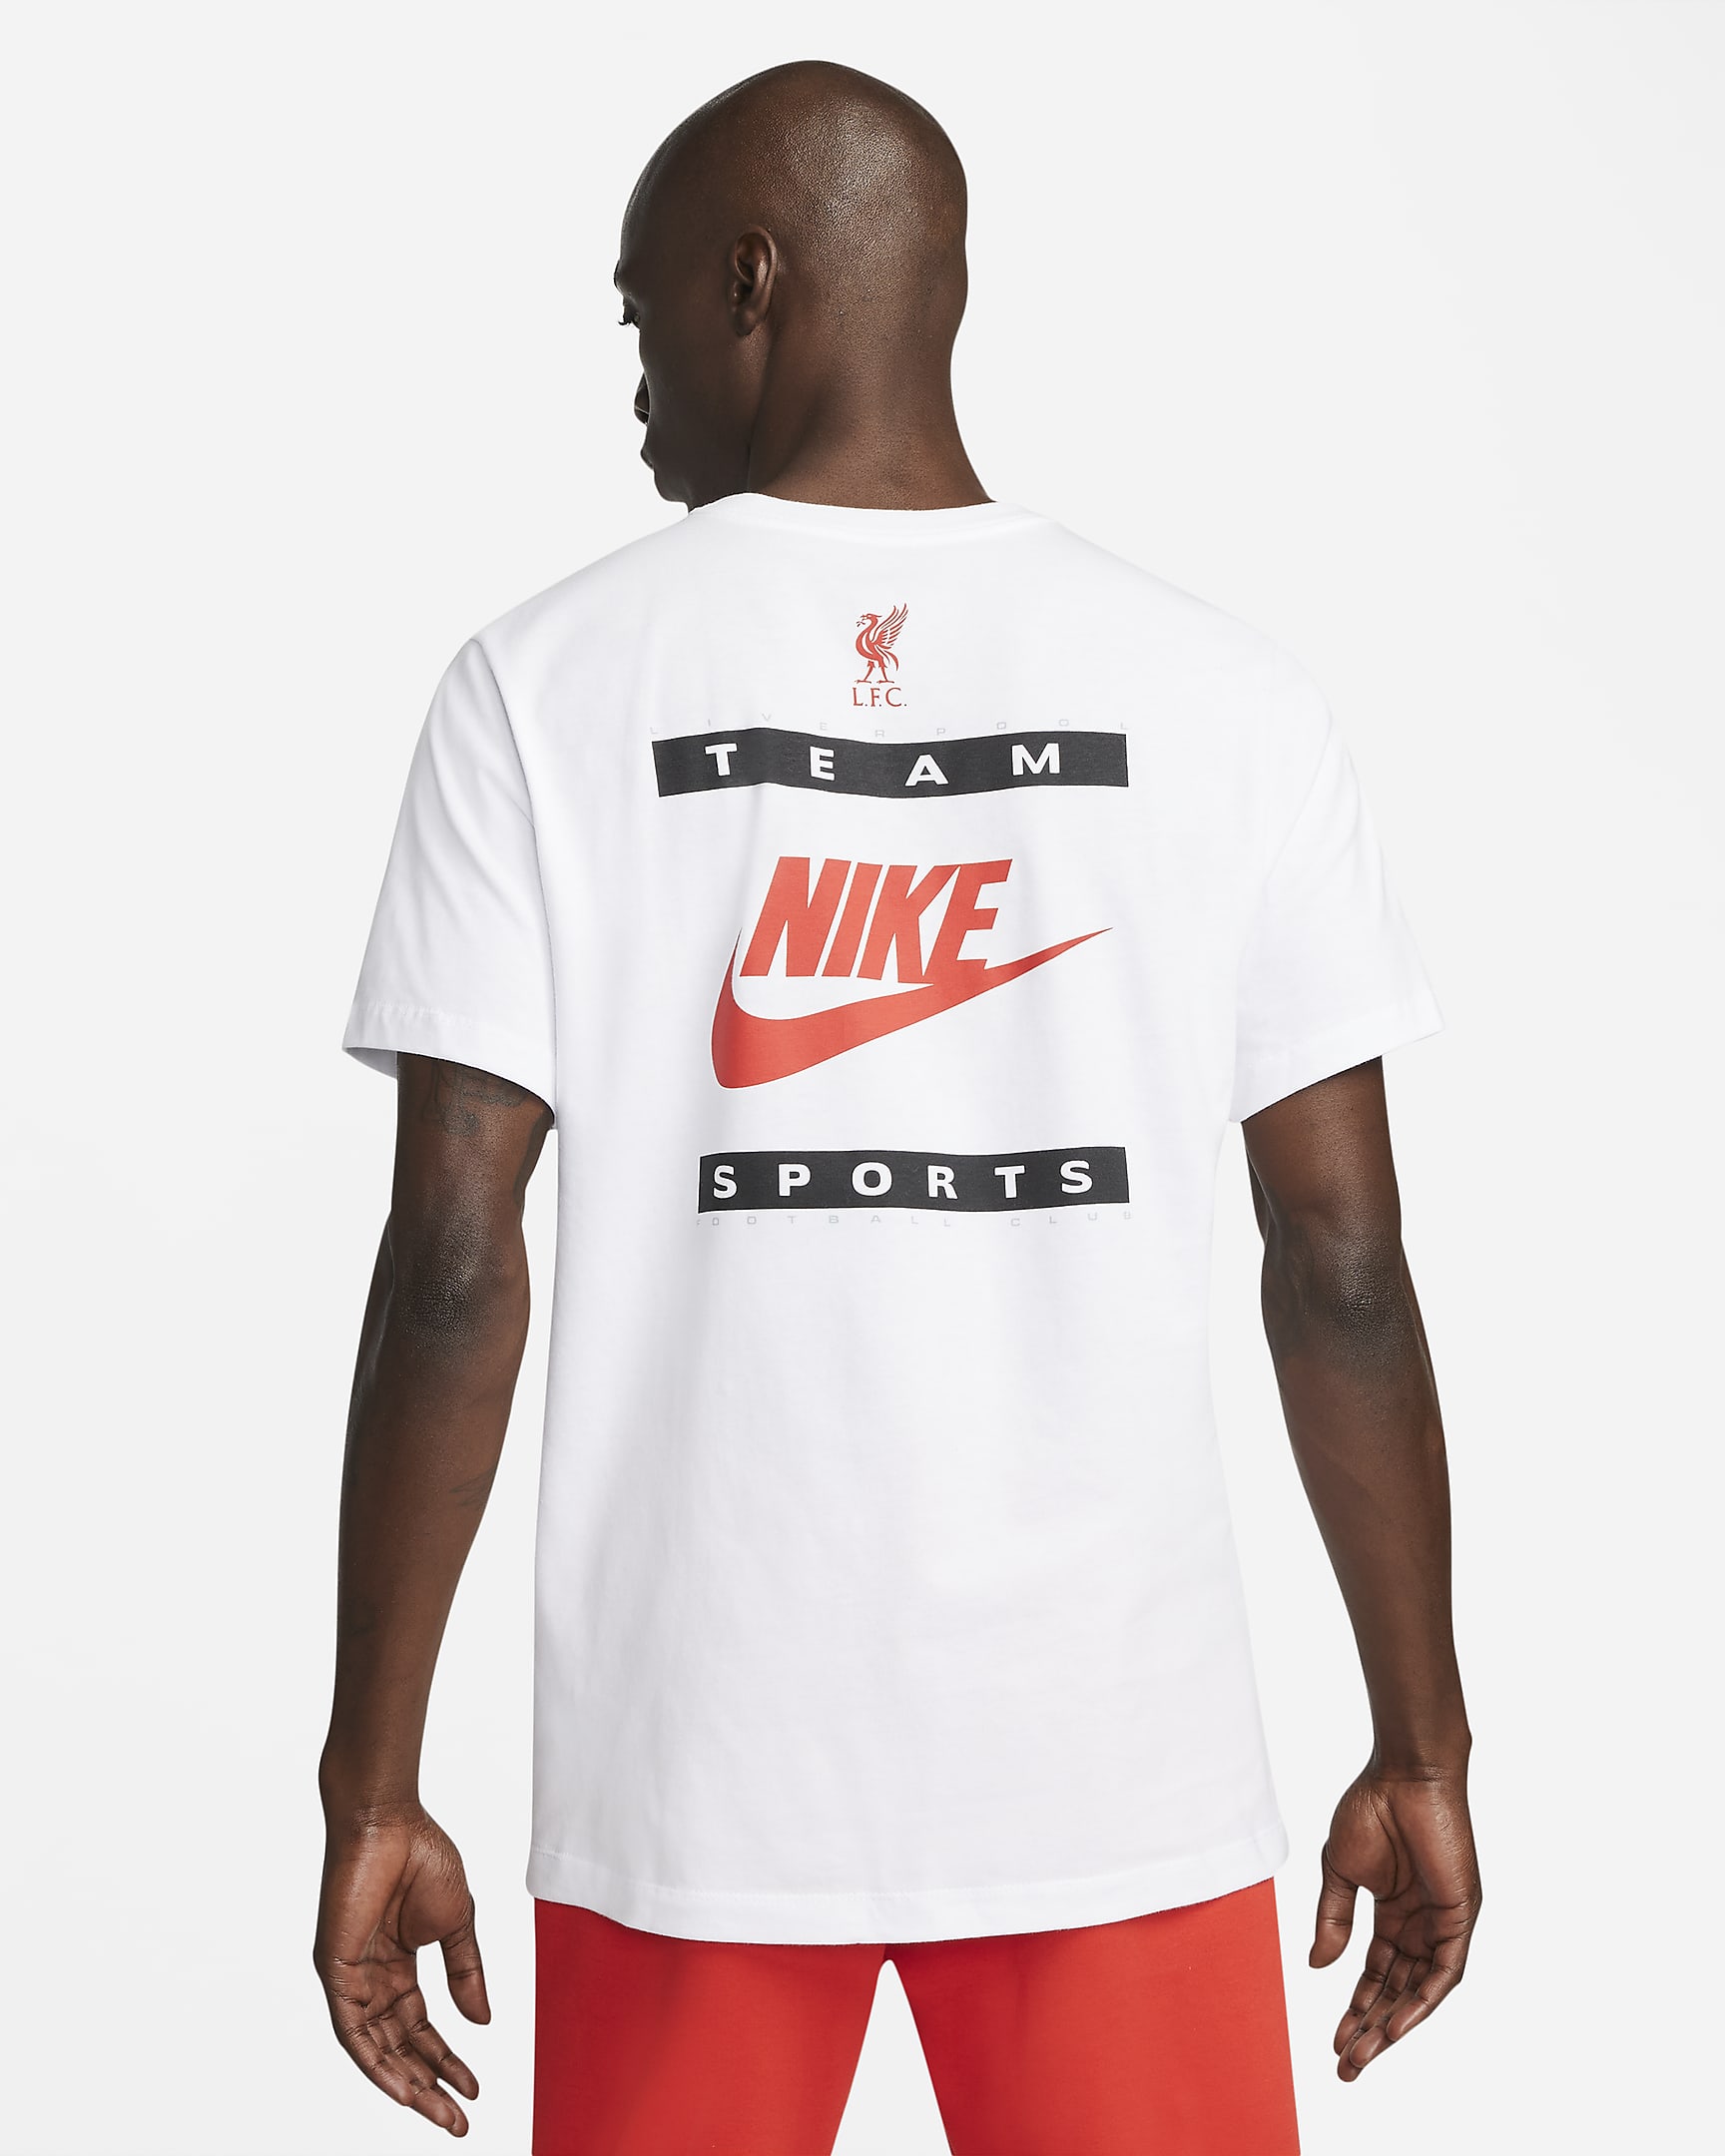 Nike Air Huarache Liverpool Shirts Hats Clothing Outfits